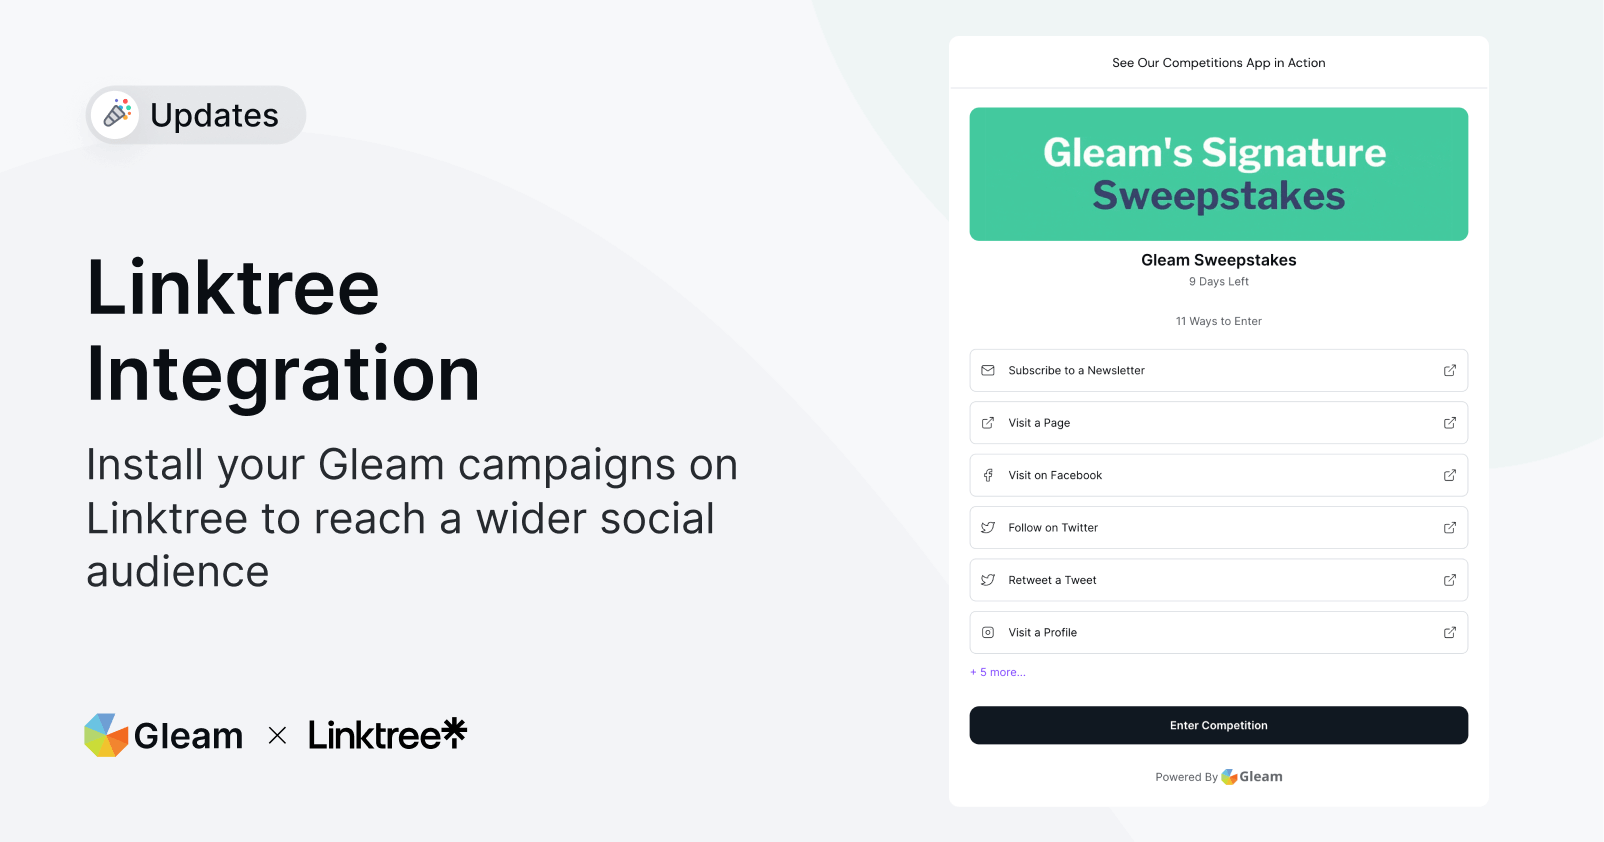 Gleam x Linktree Integration